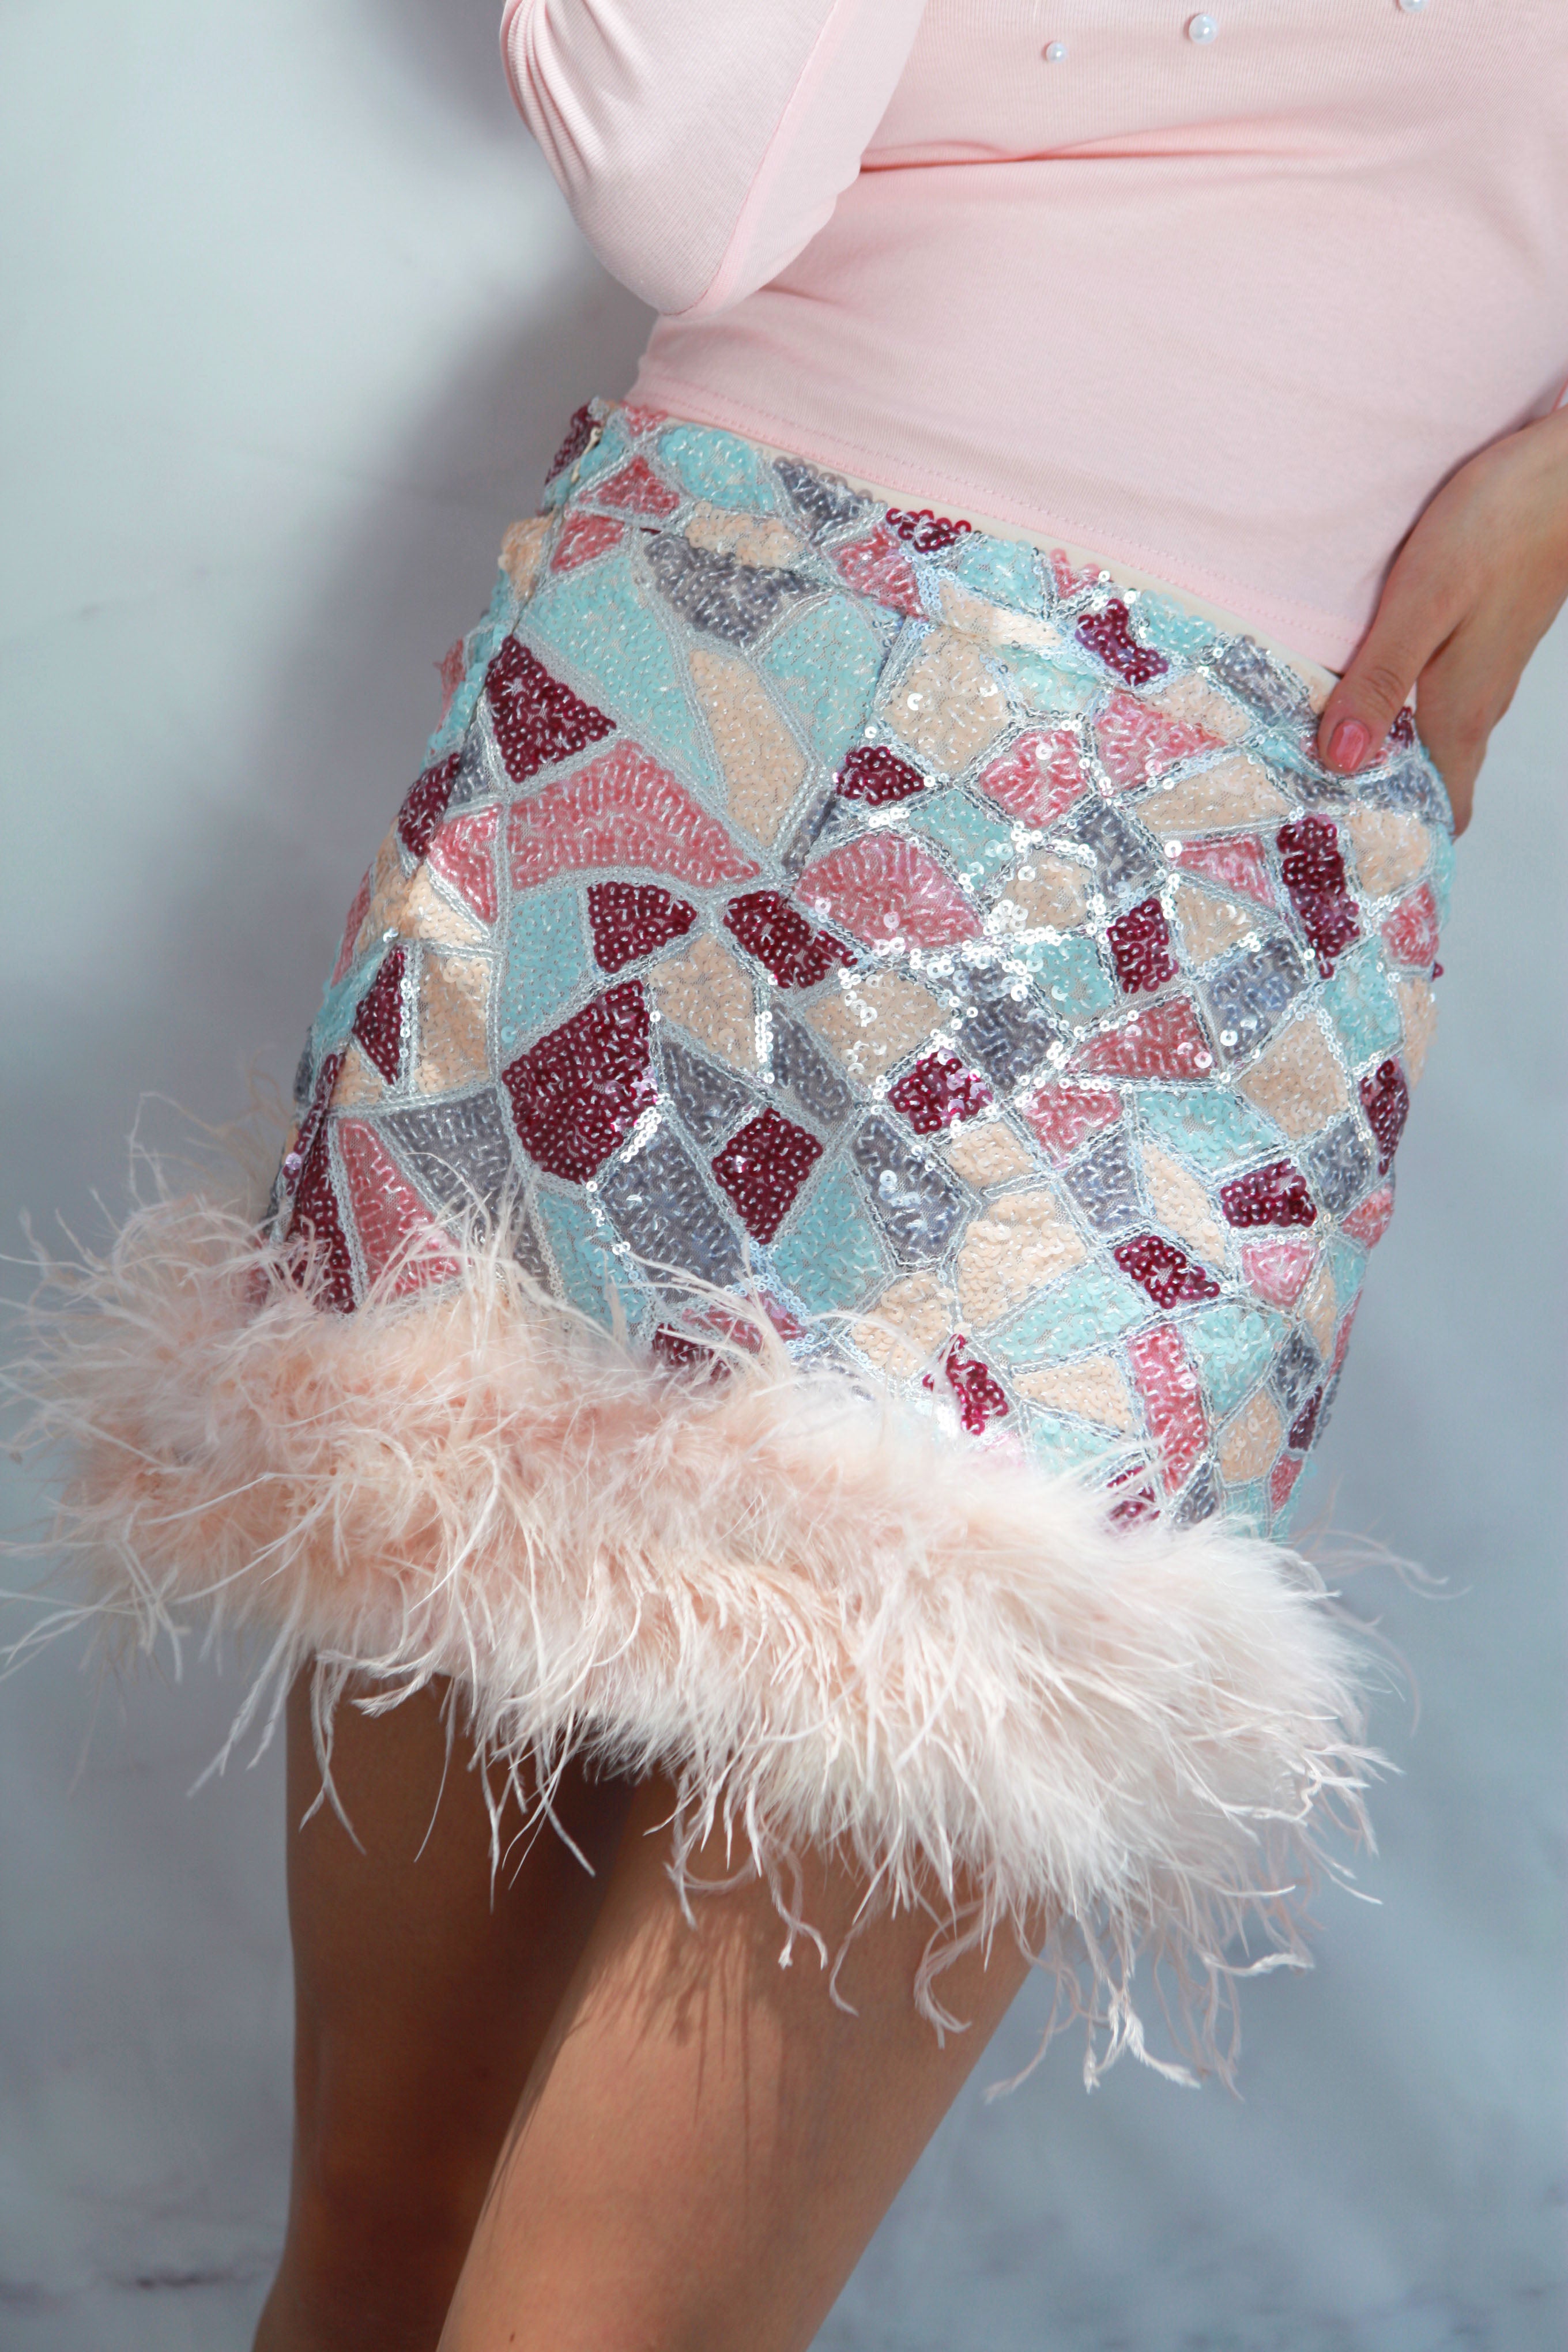 Mini falda lentejuelas vitral con plumas Rosa – Fashion Styled